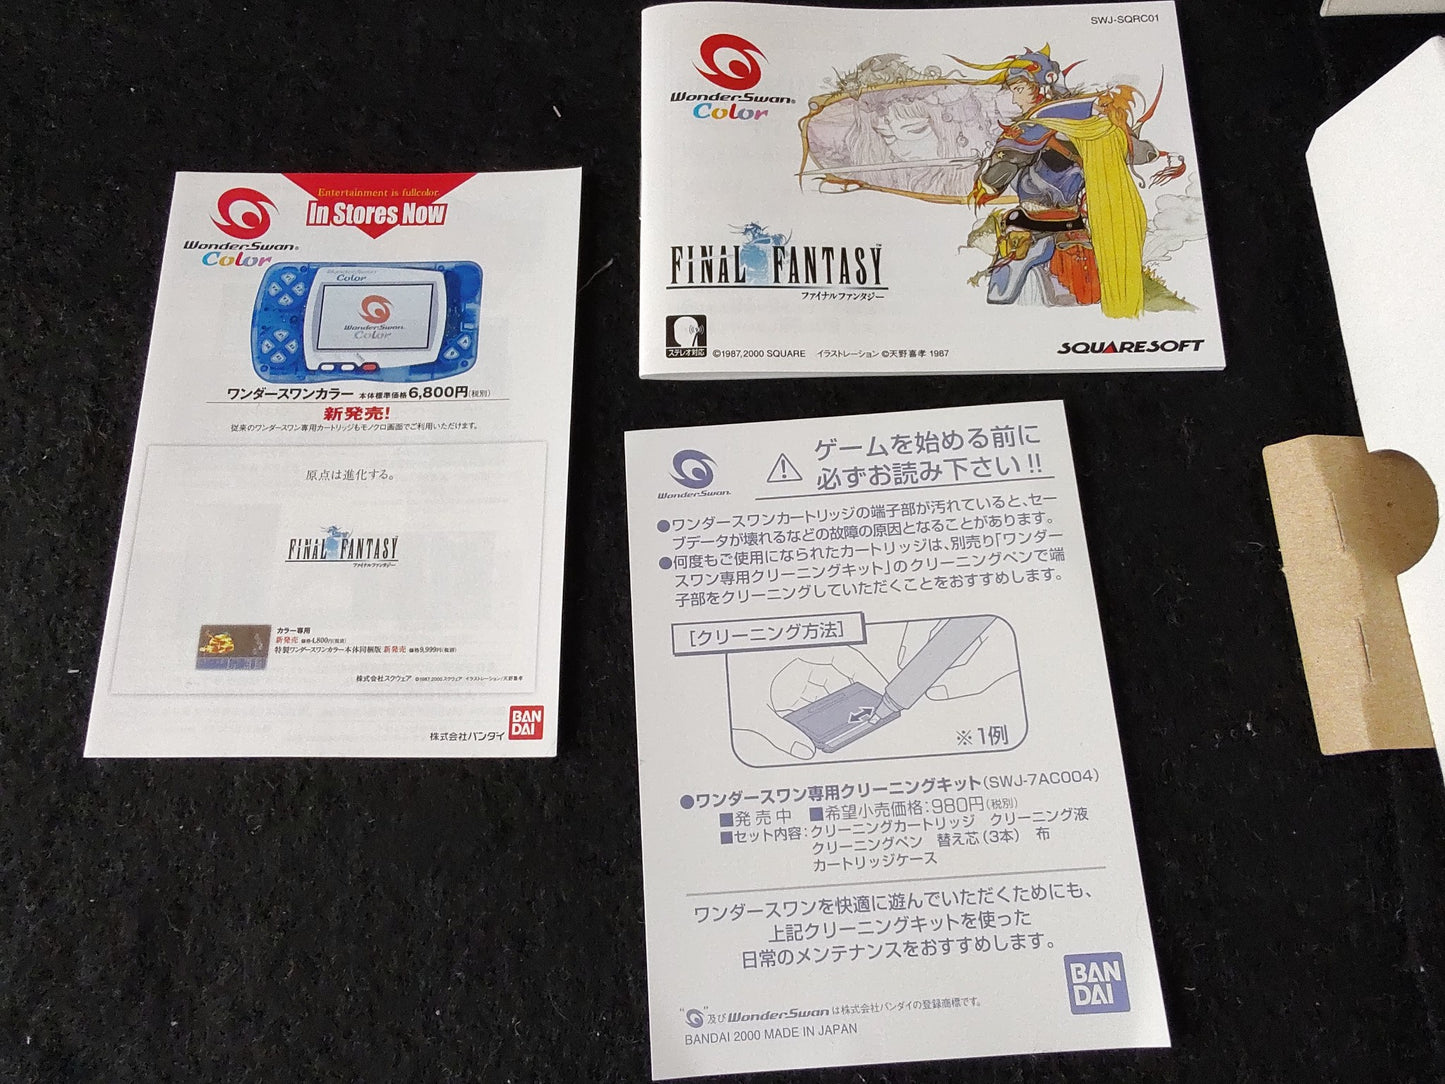 BANDAI Wonder Swan Color Final Fantasy Limited model console Boxes set-f0908-